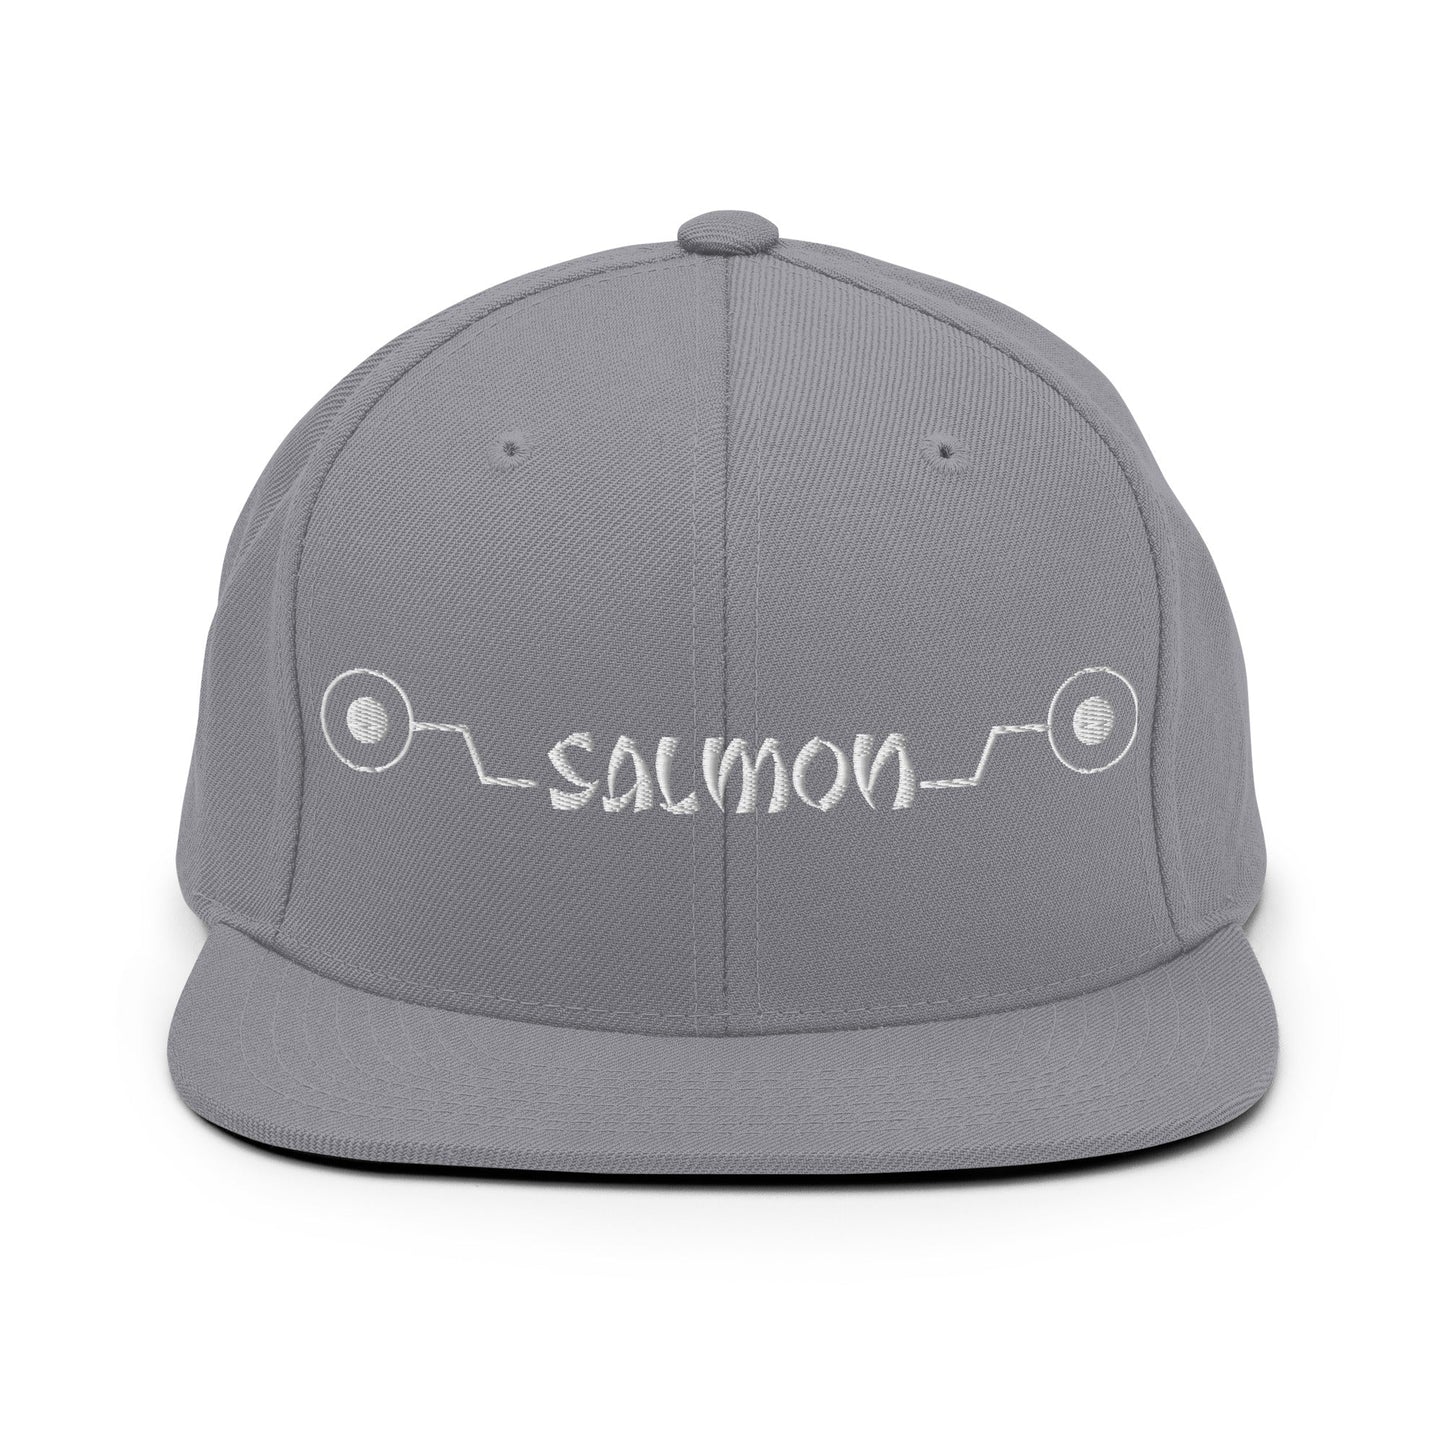 Inumaki 'Salmon' Cursed Speech Embroidered Unisex Anime Snap Back Hat